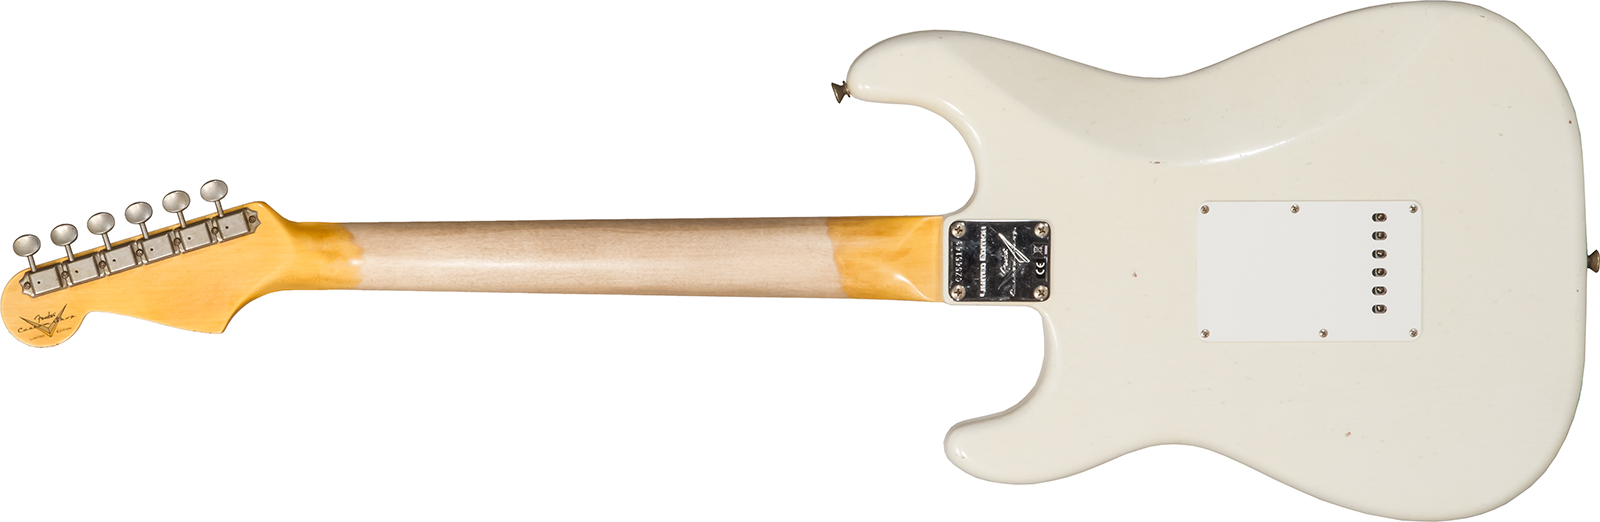 Fender Custom Shop Strat 1962/63 3s Trem Rw #cz565163 - Journeyman Relic Olympic White - Guitarra eléctrica con forma de str. - Variation 1